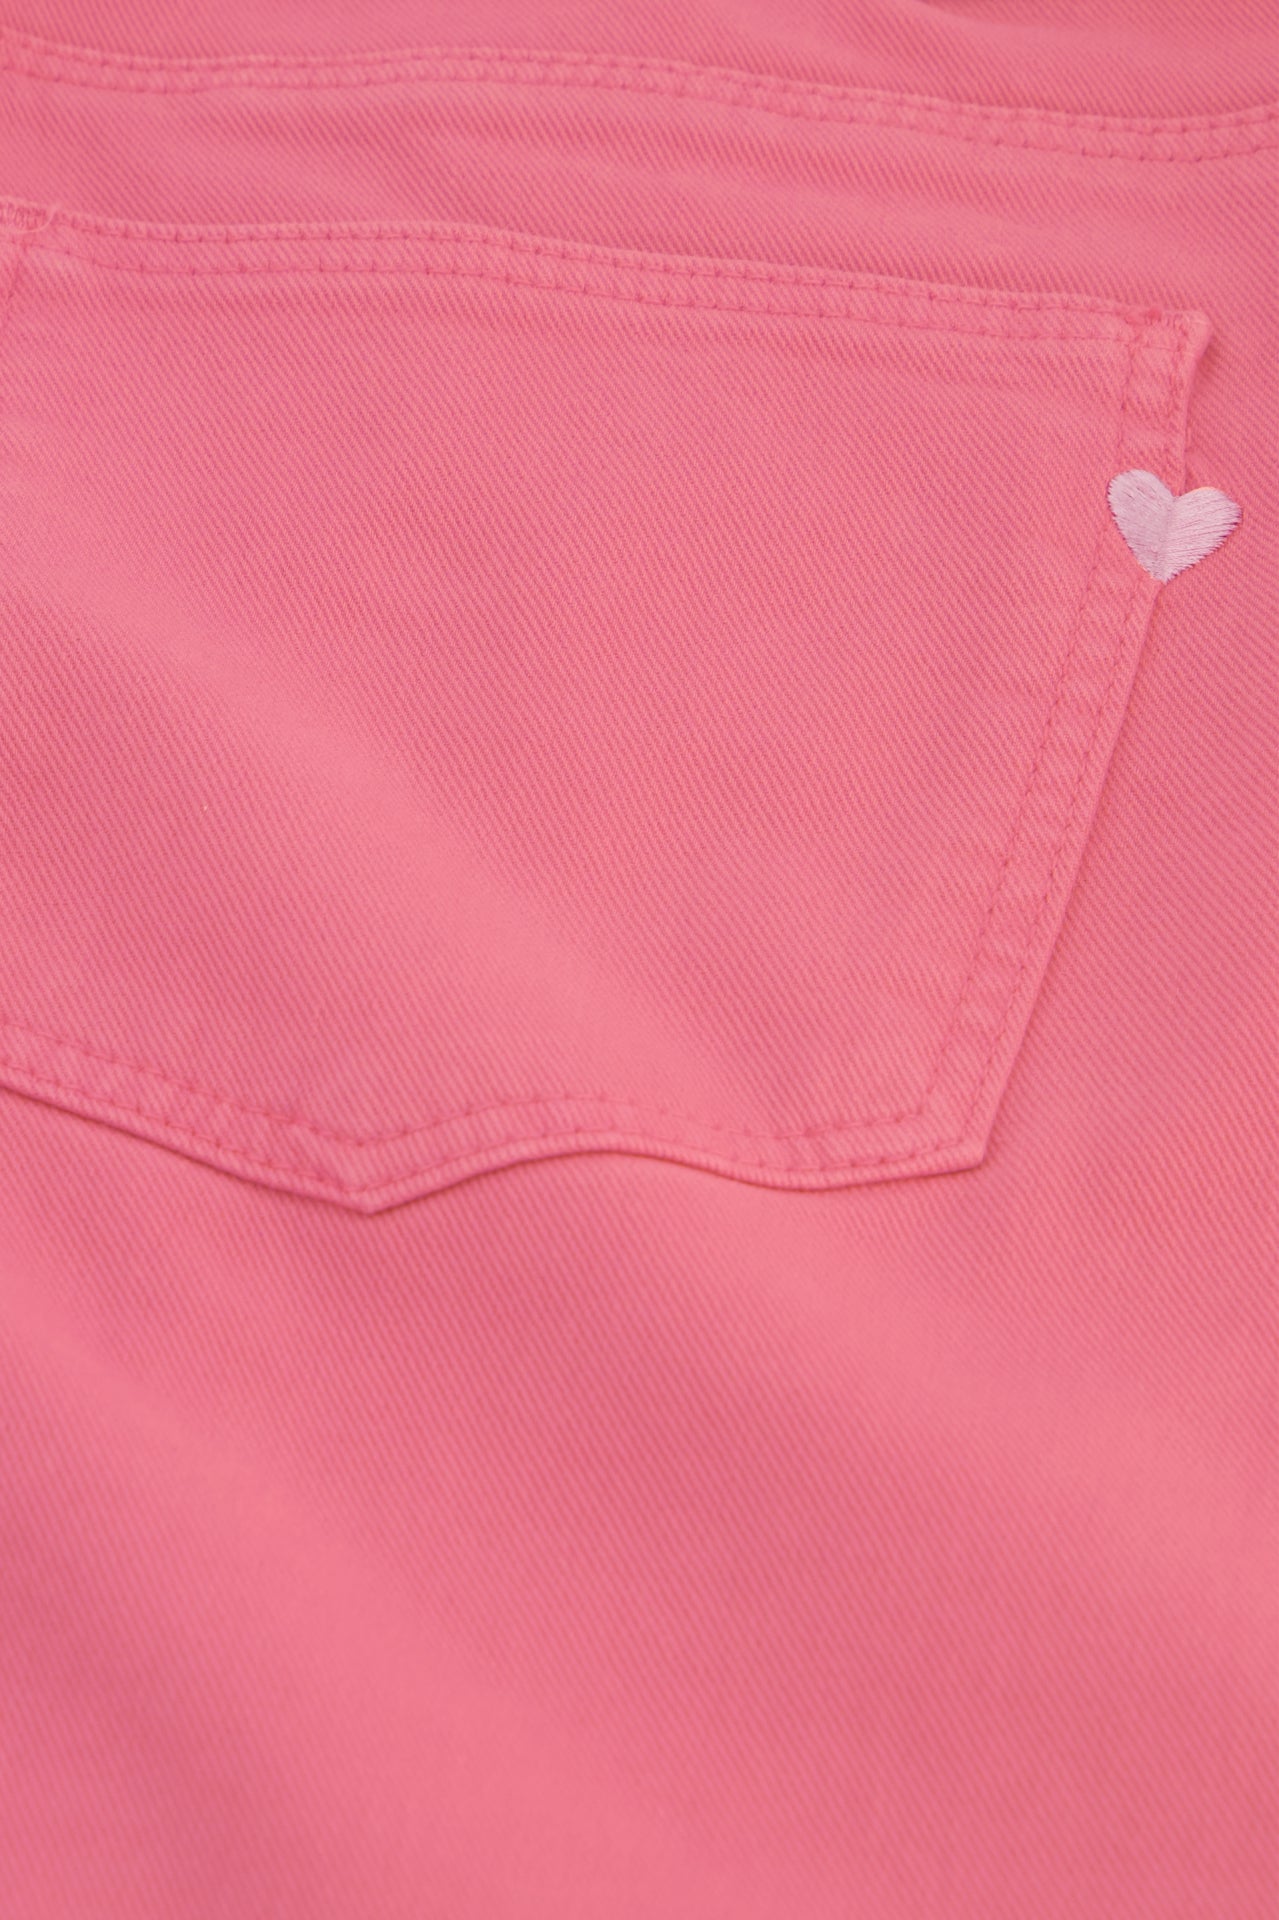 Tati Skirt | Slush Puppy Pink